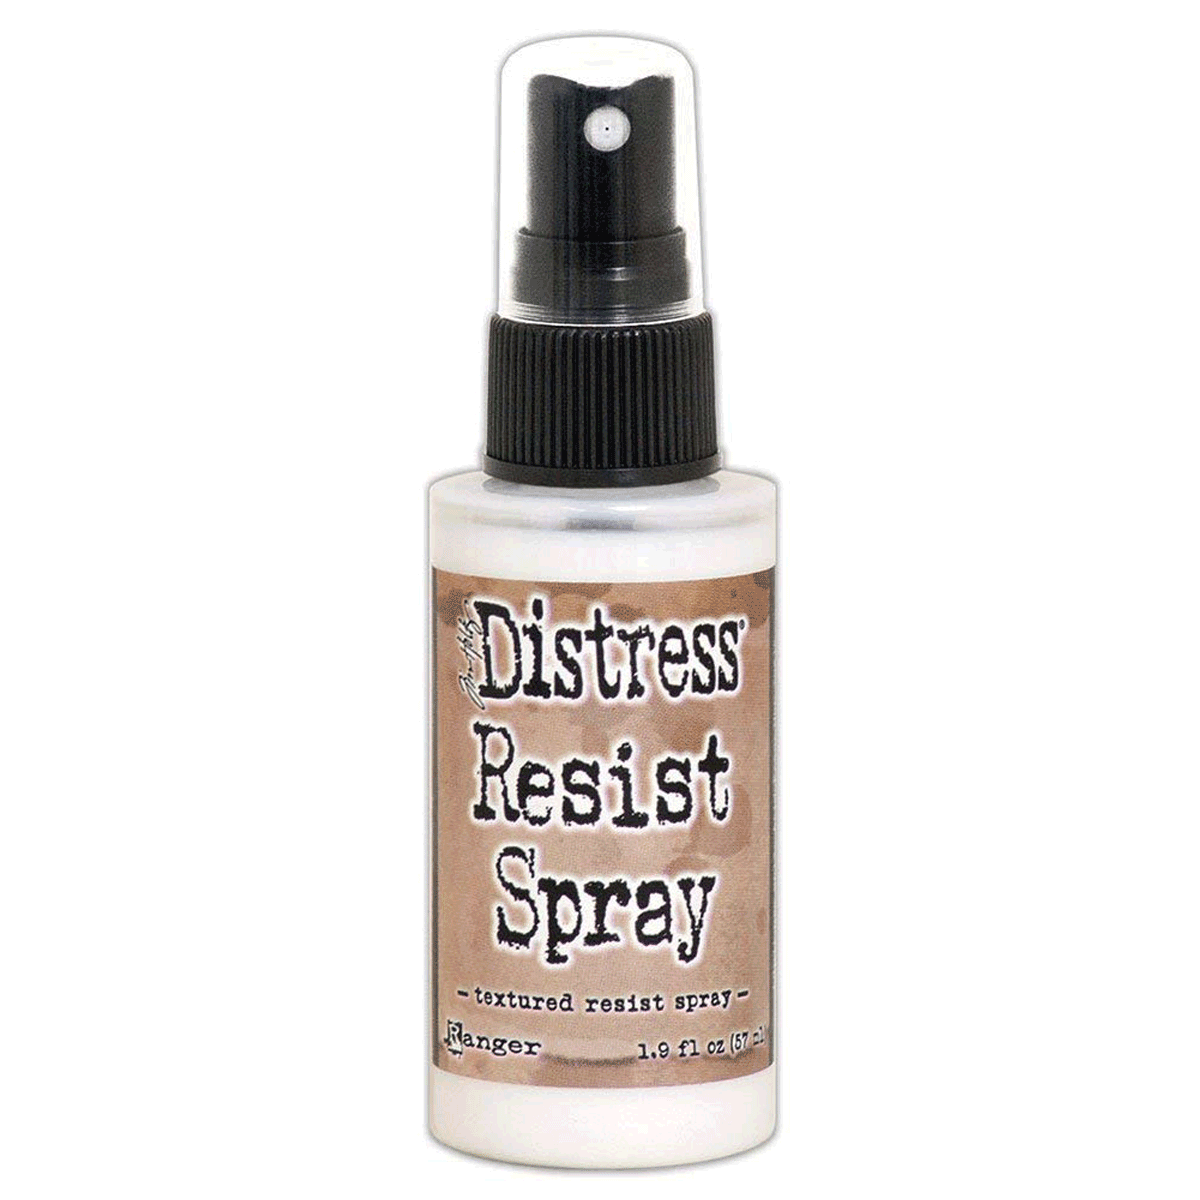 Tim Holtz Distress Resist Spray 1.9 oz Bottle